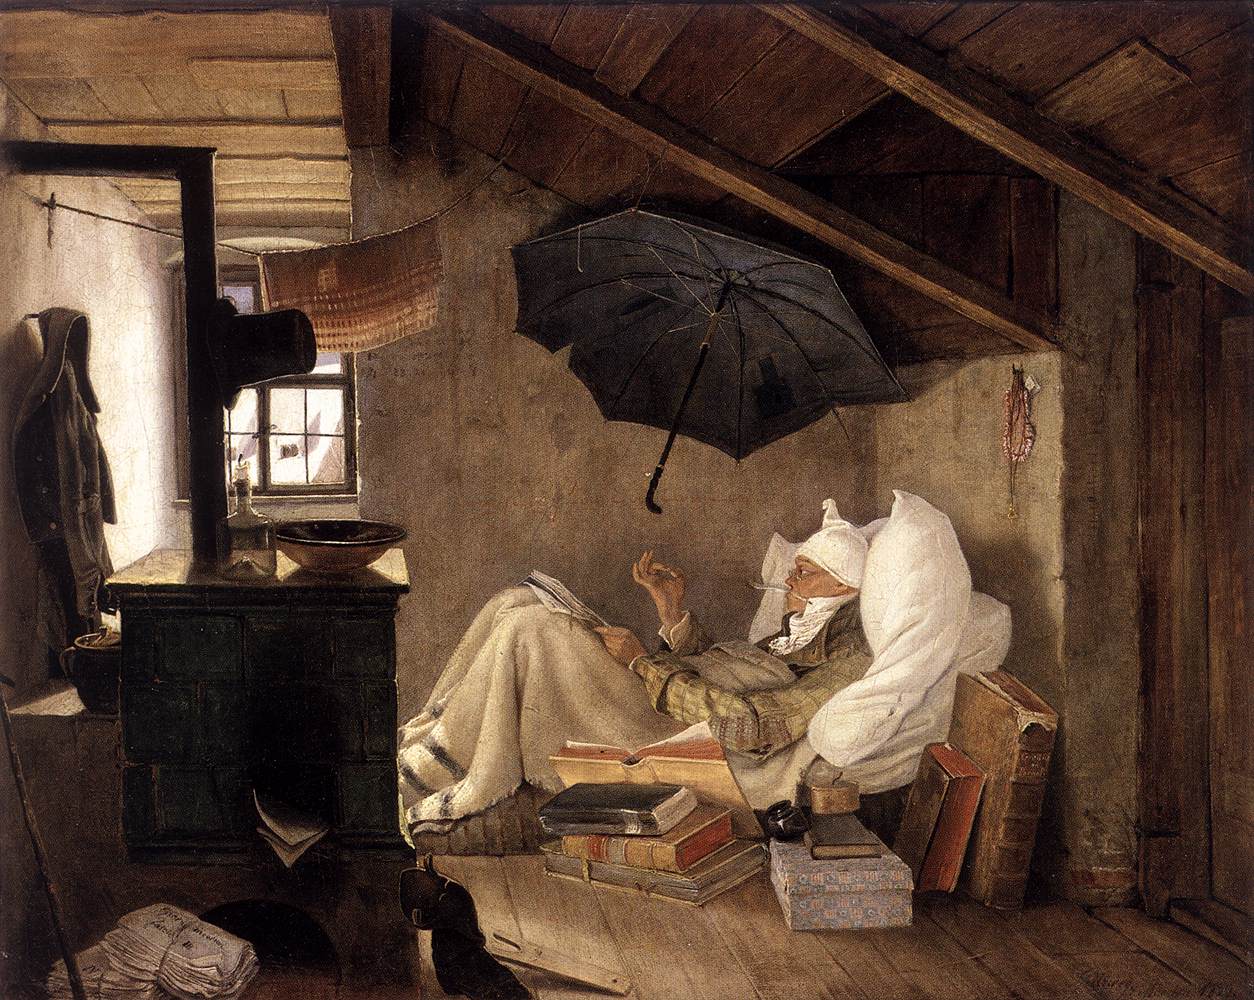 The Poor Poet (1839) by Carl Spitzweg